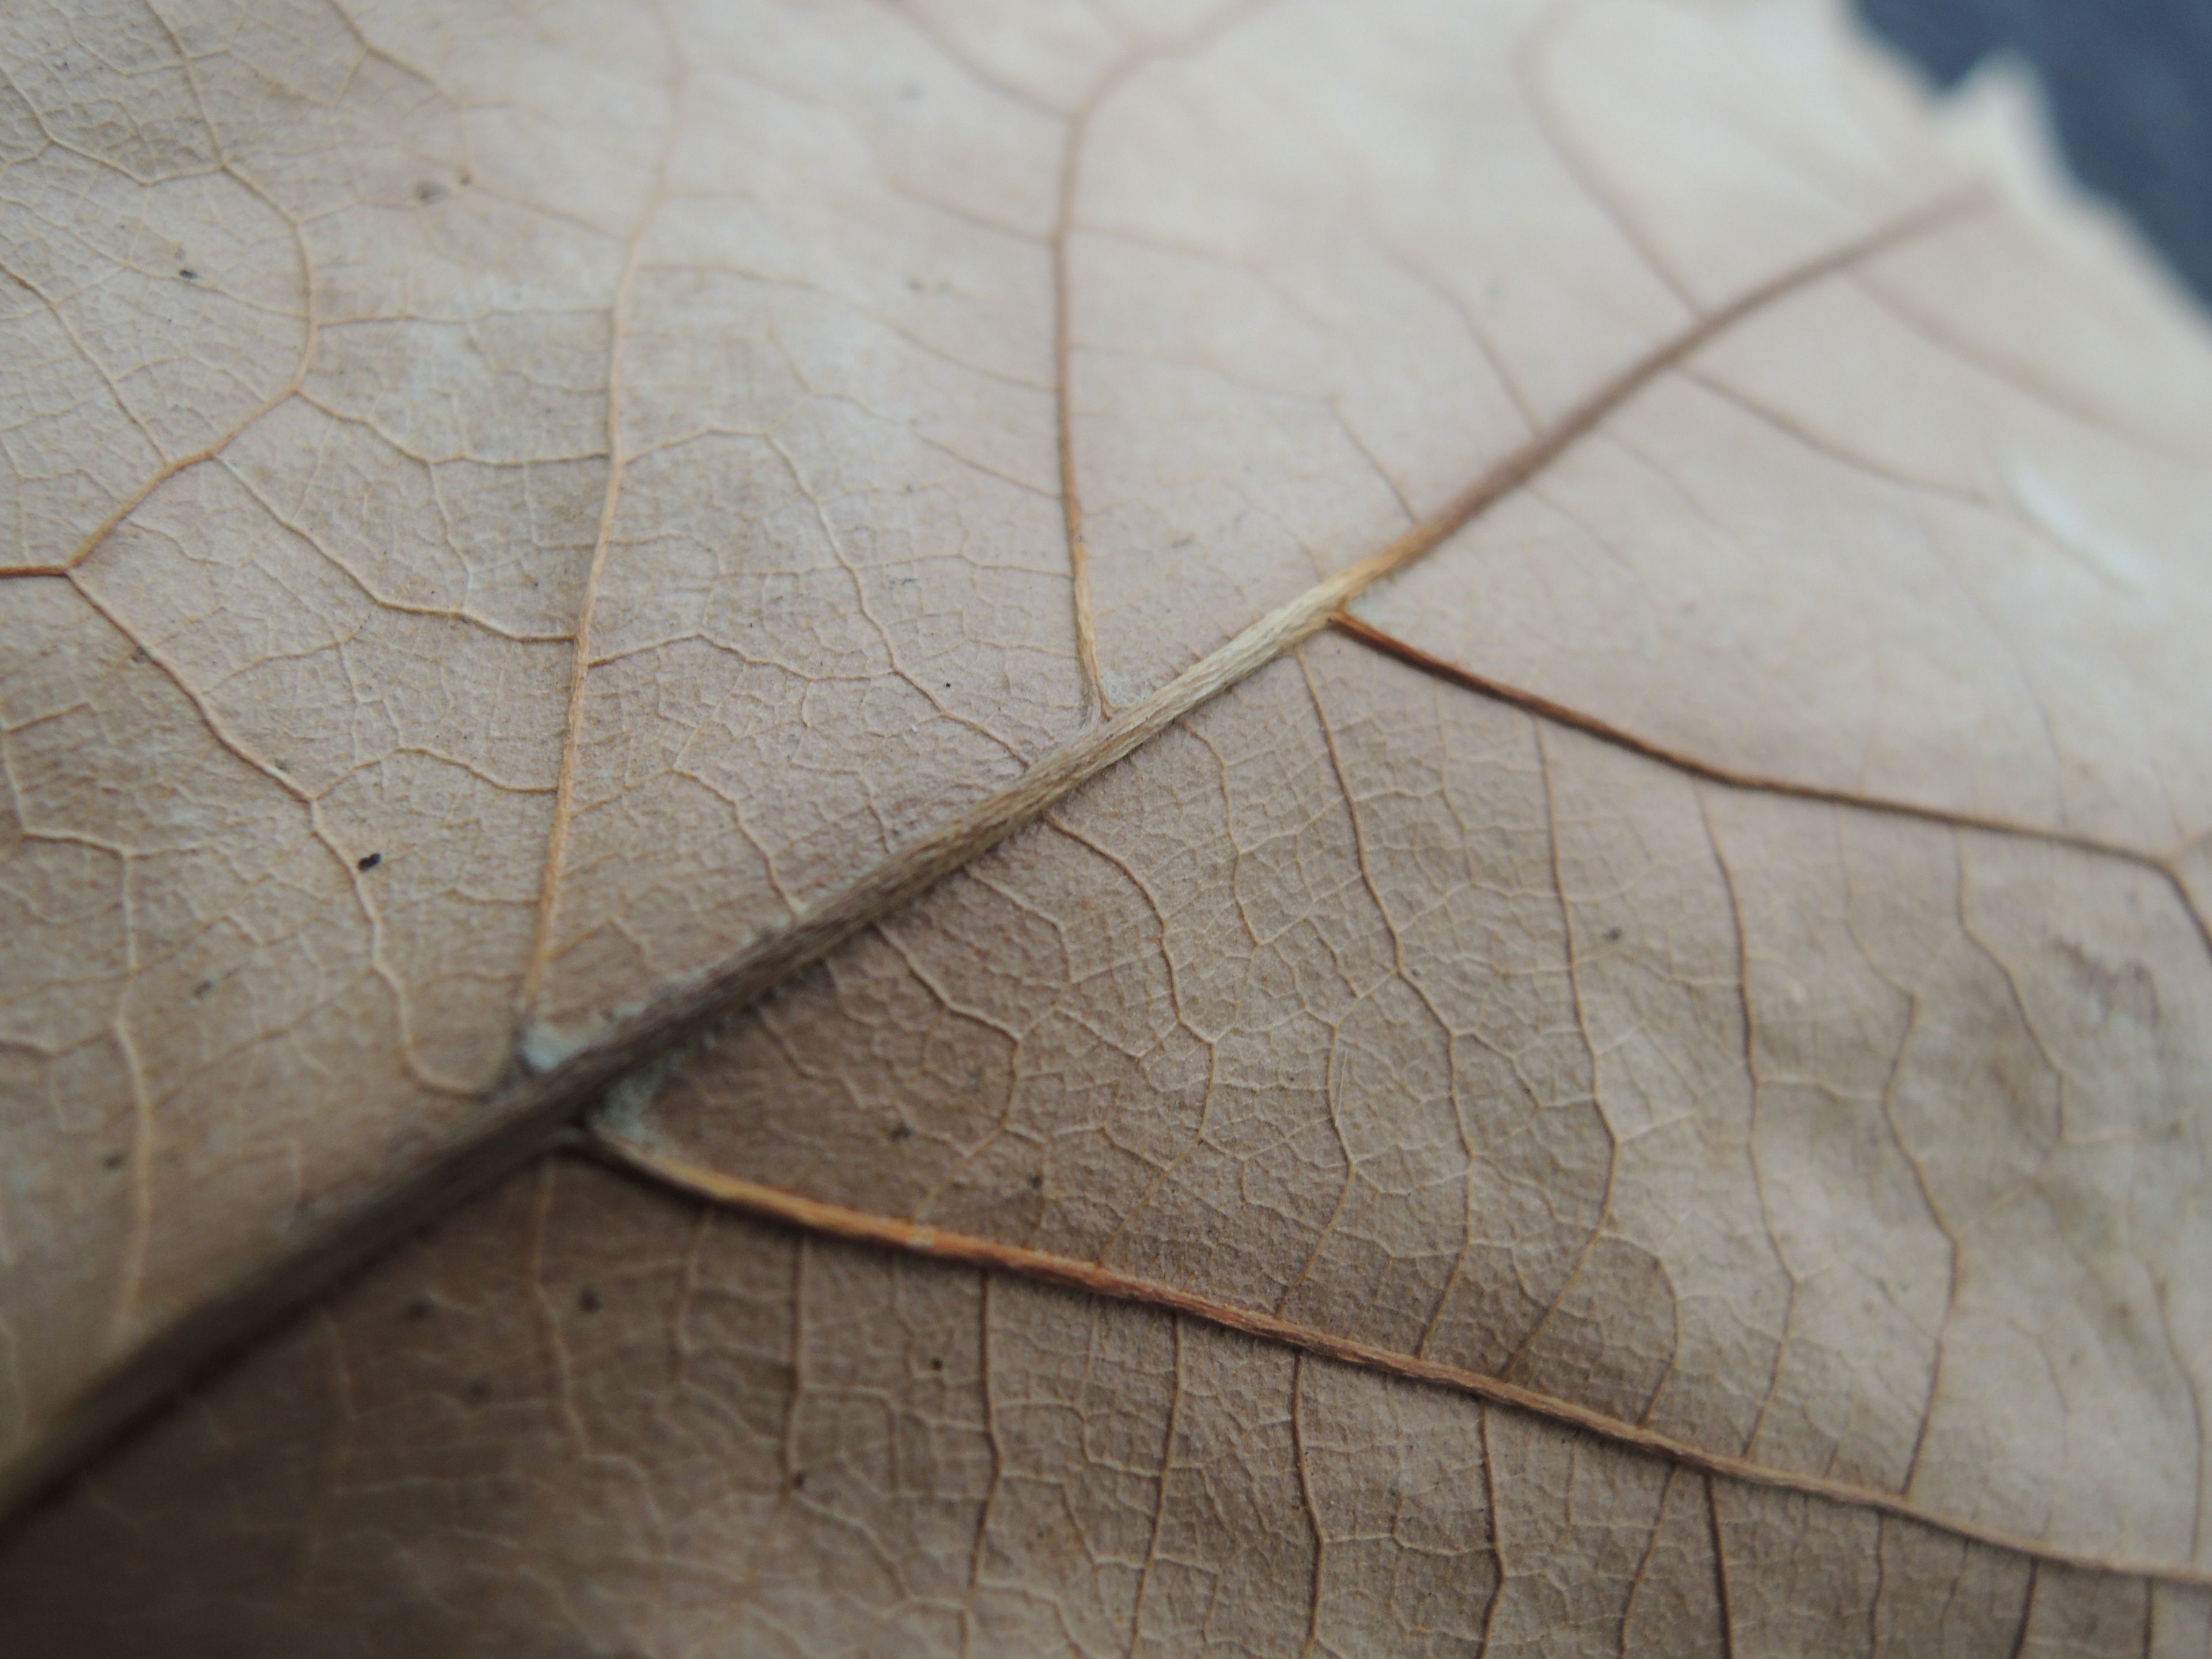 A close-up of a dried leaf.